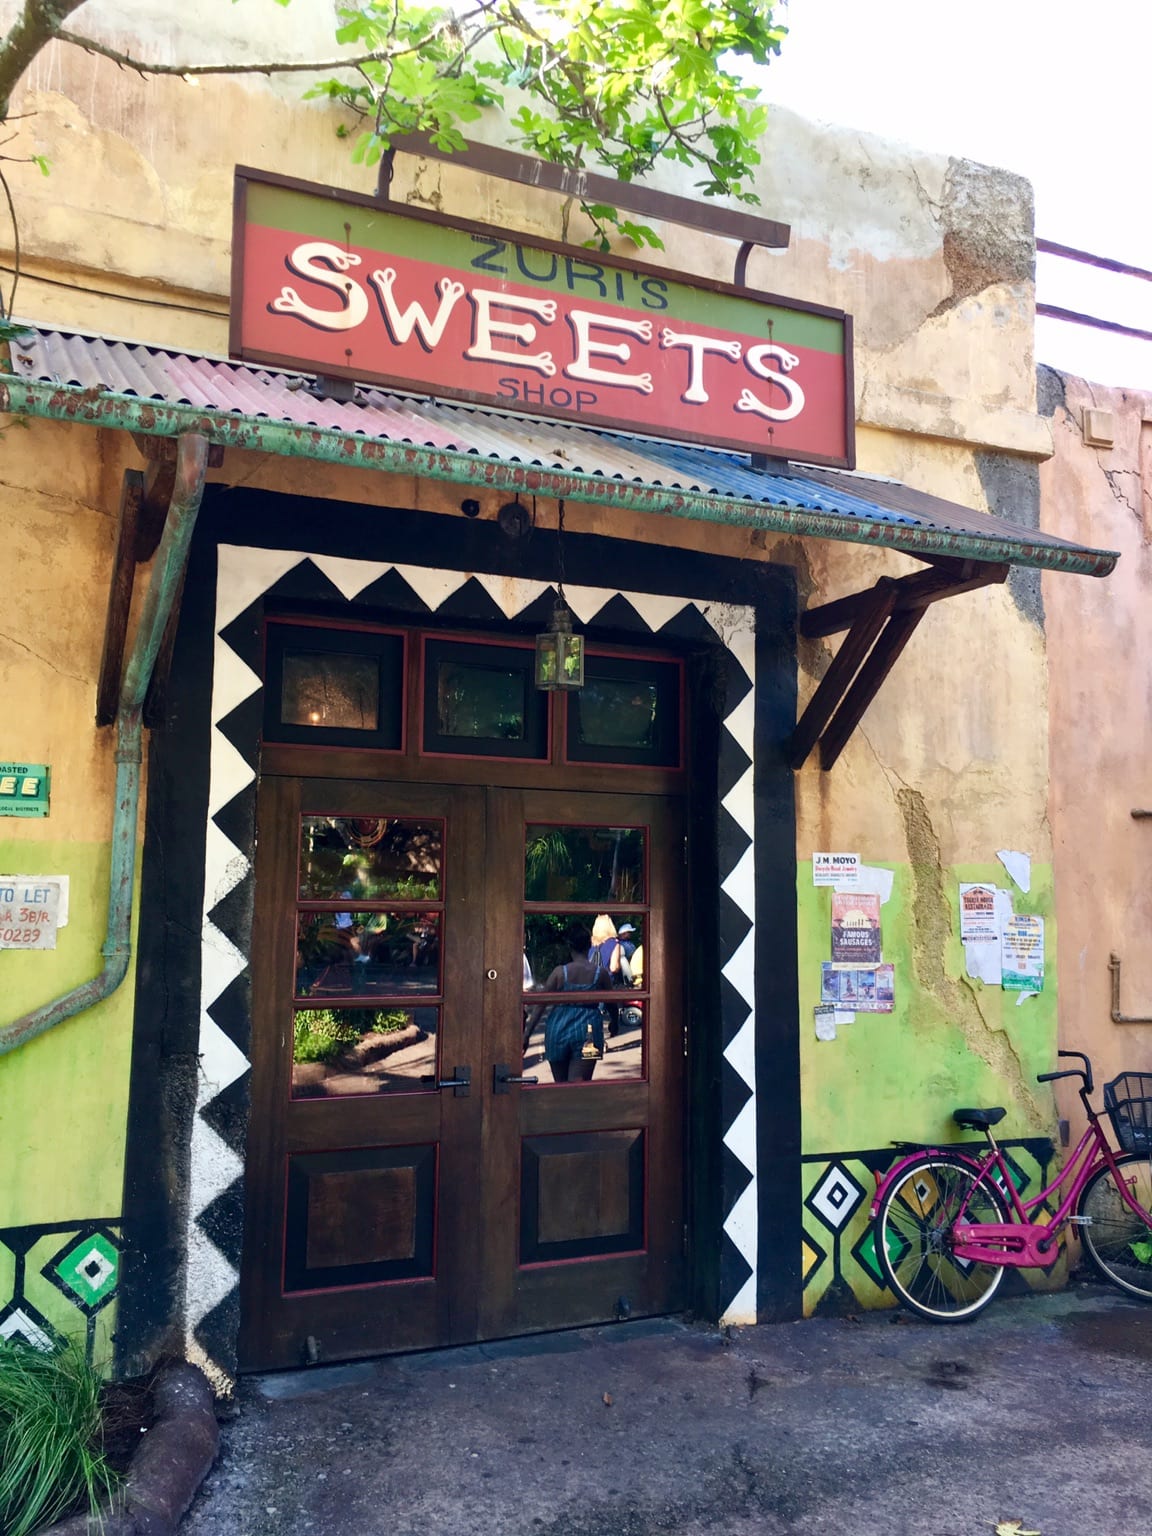 Zuri's Sweets Shop Review in Disney's Animal Kingdom